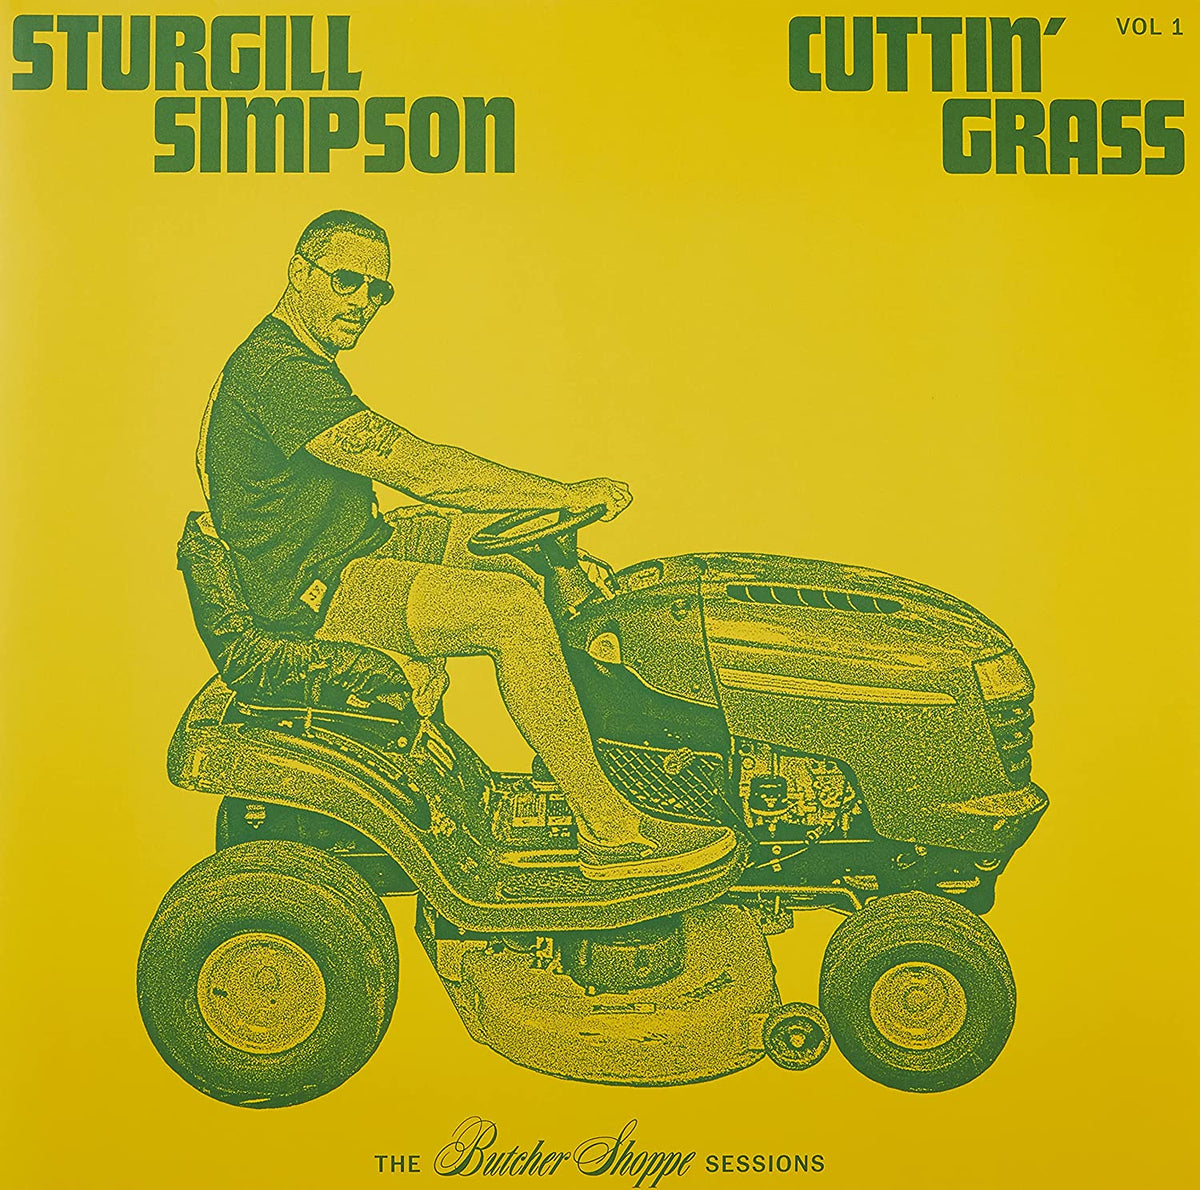 Sturgill Simpson - Cuttin' Grass Vol. 1 2LP (Gatefold)